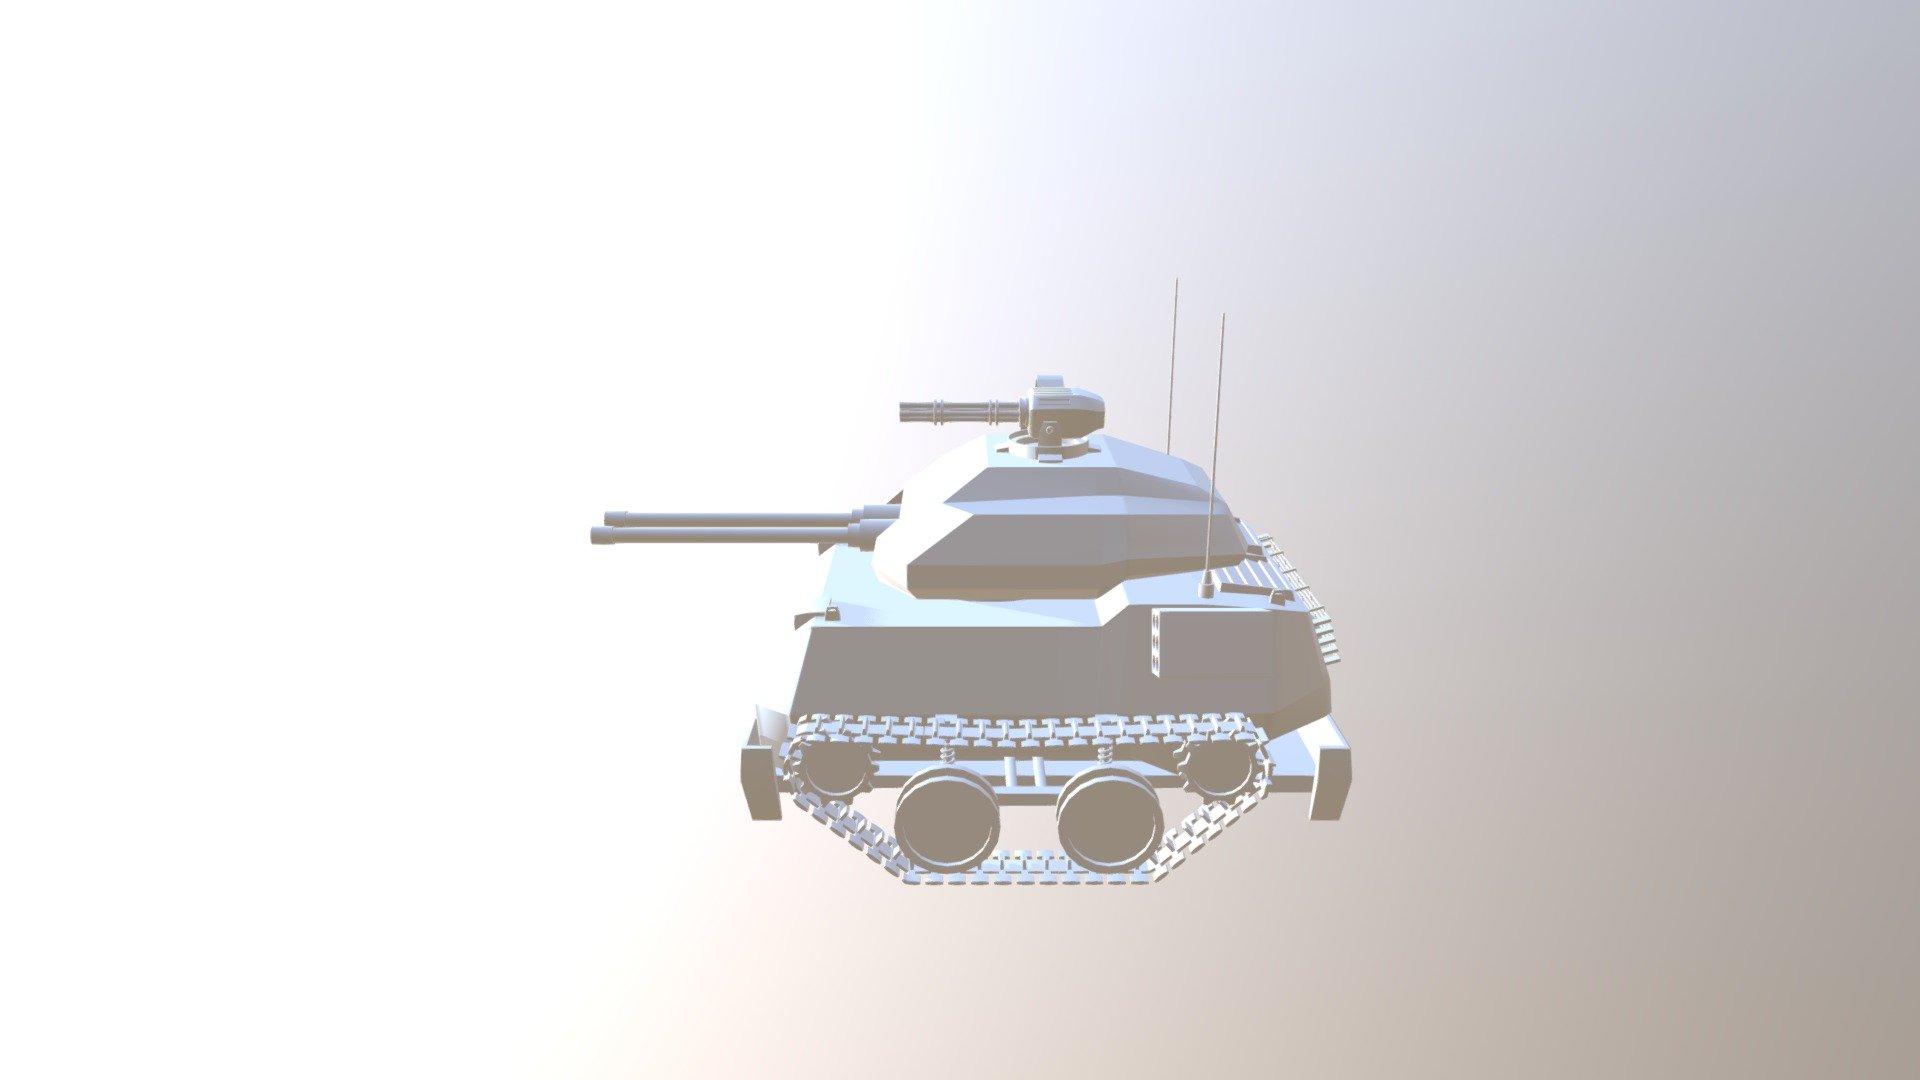 badass future military tank